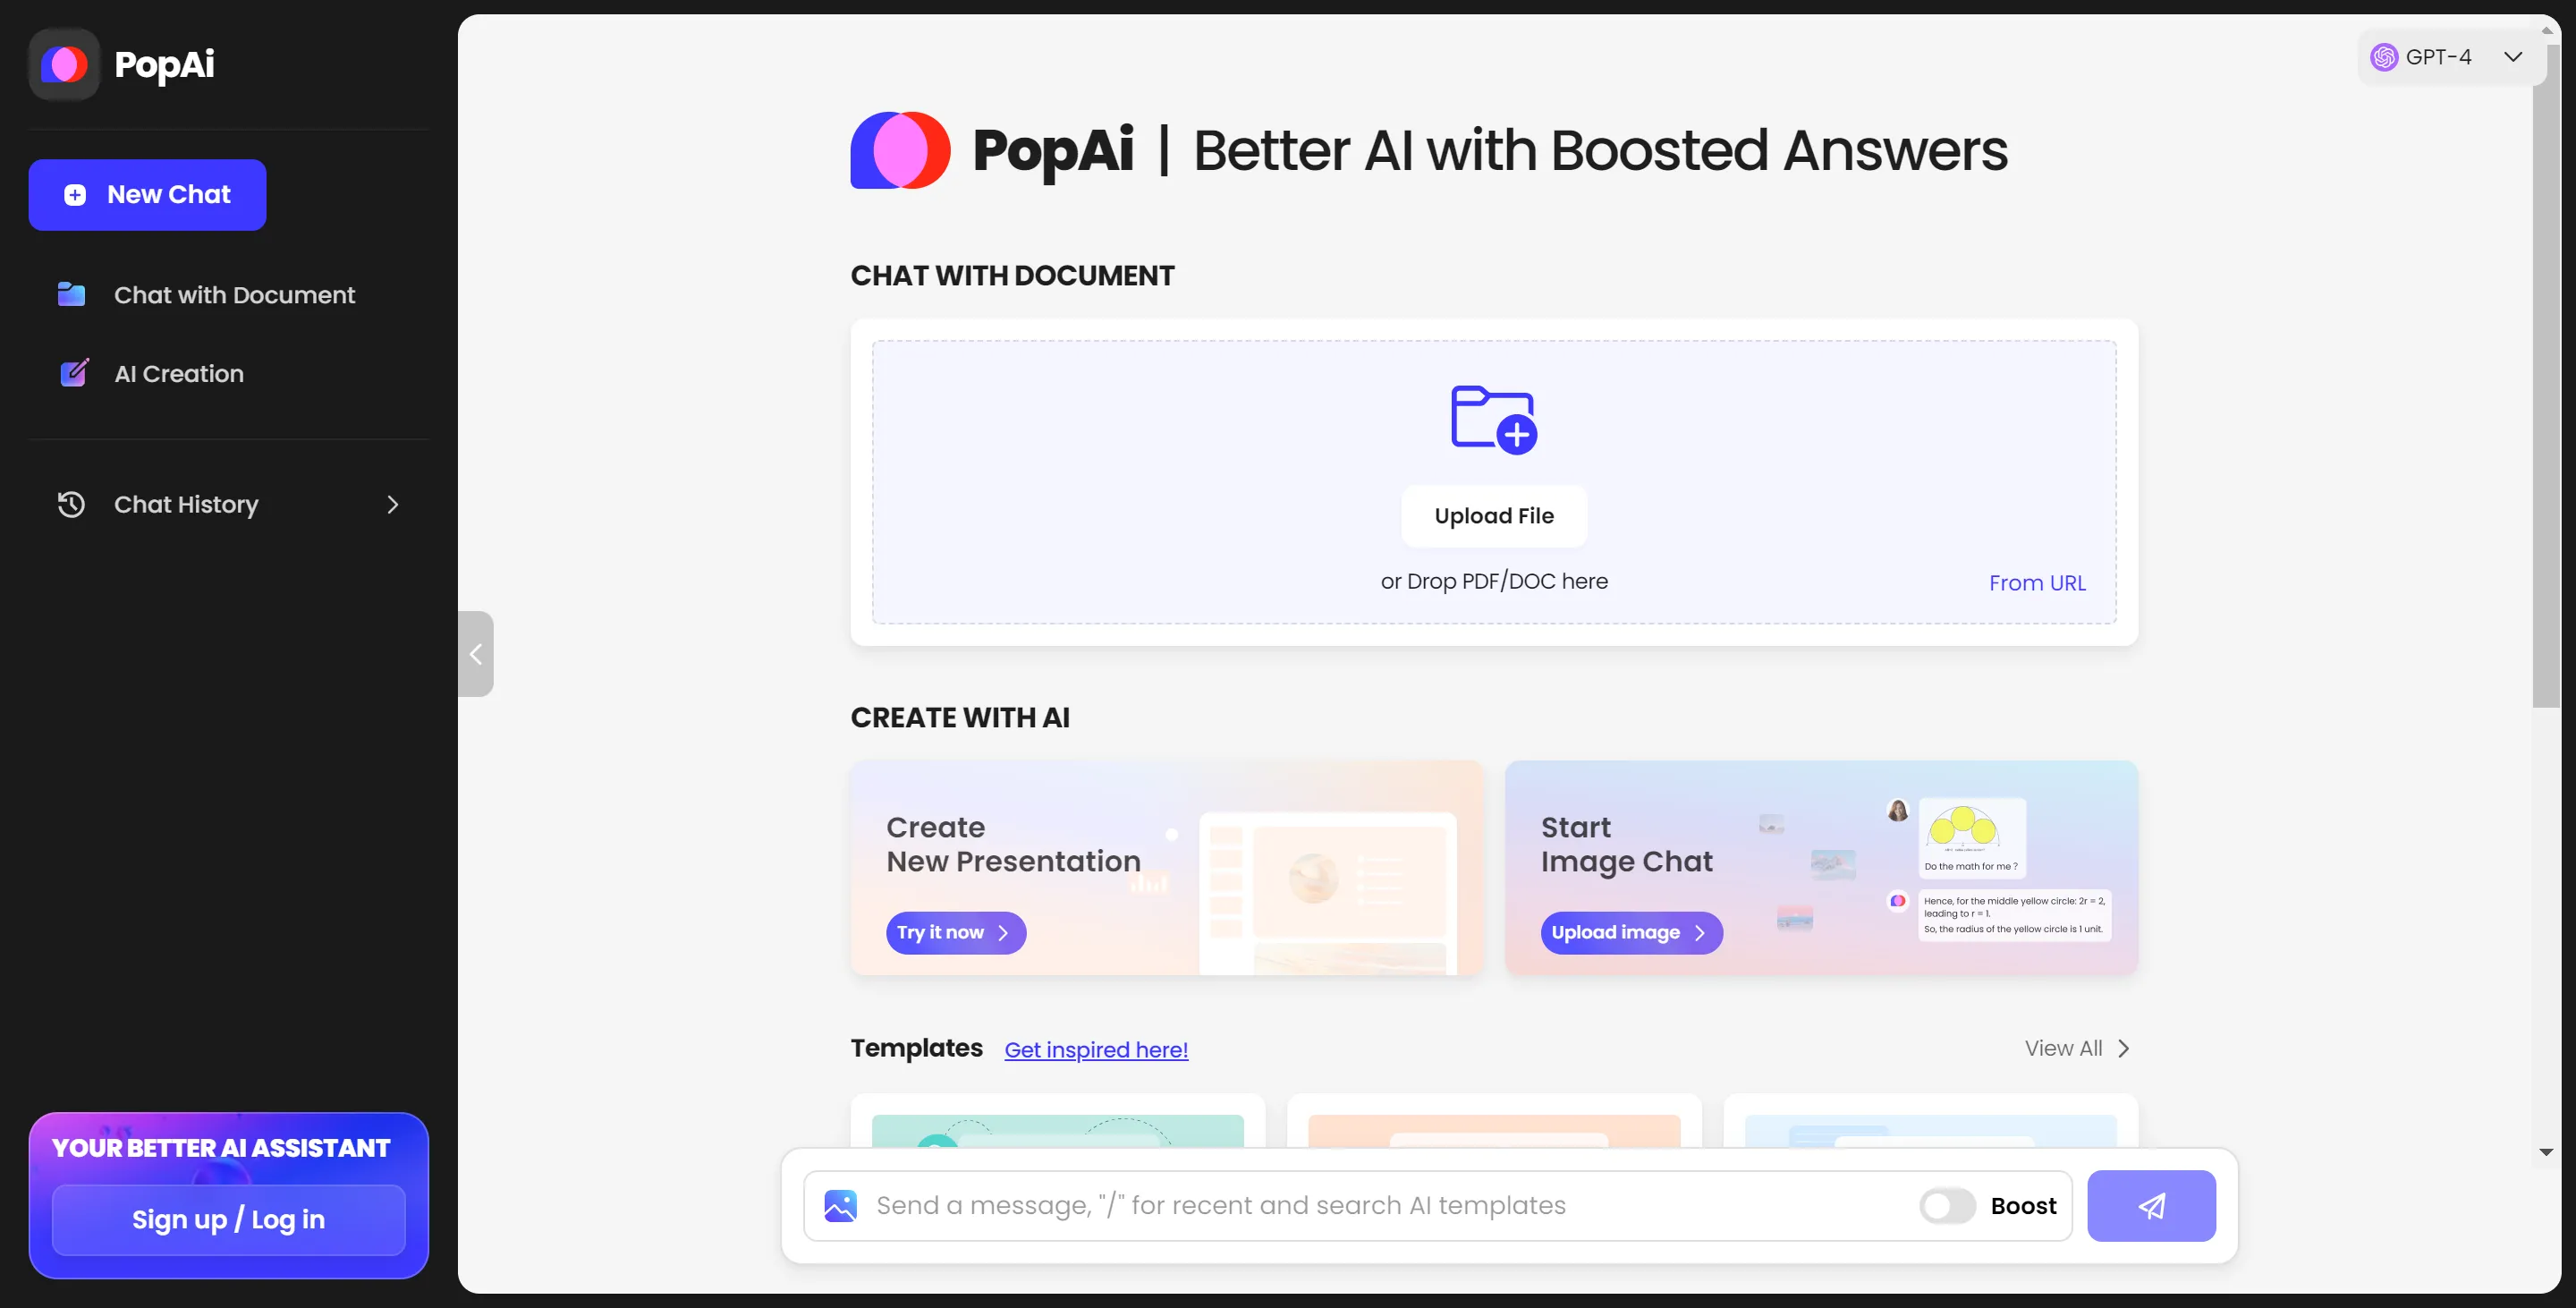 PopAI interface